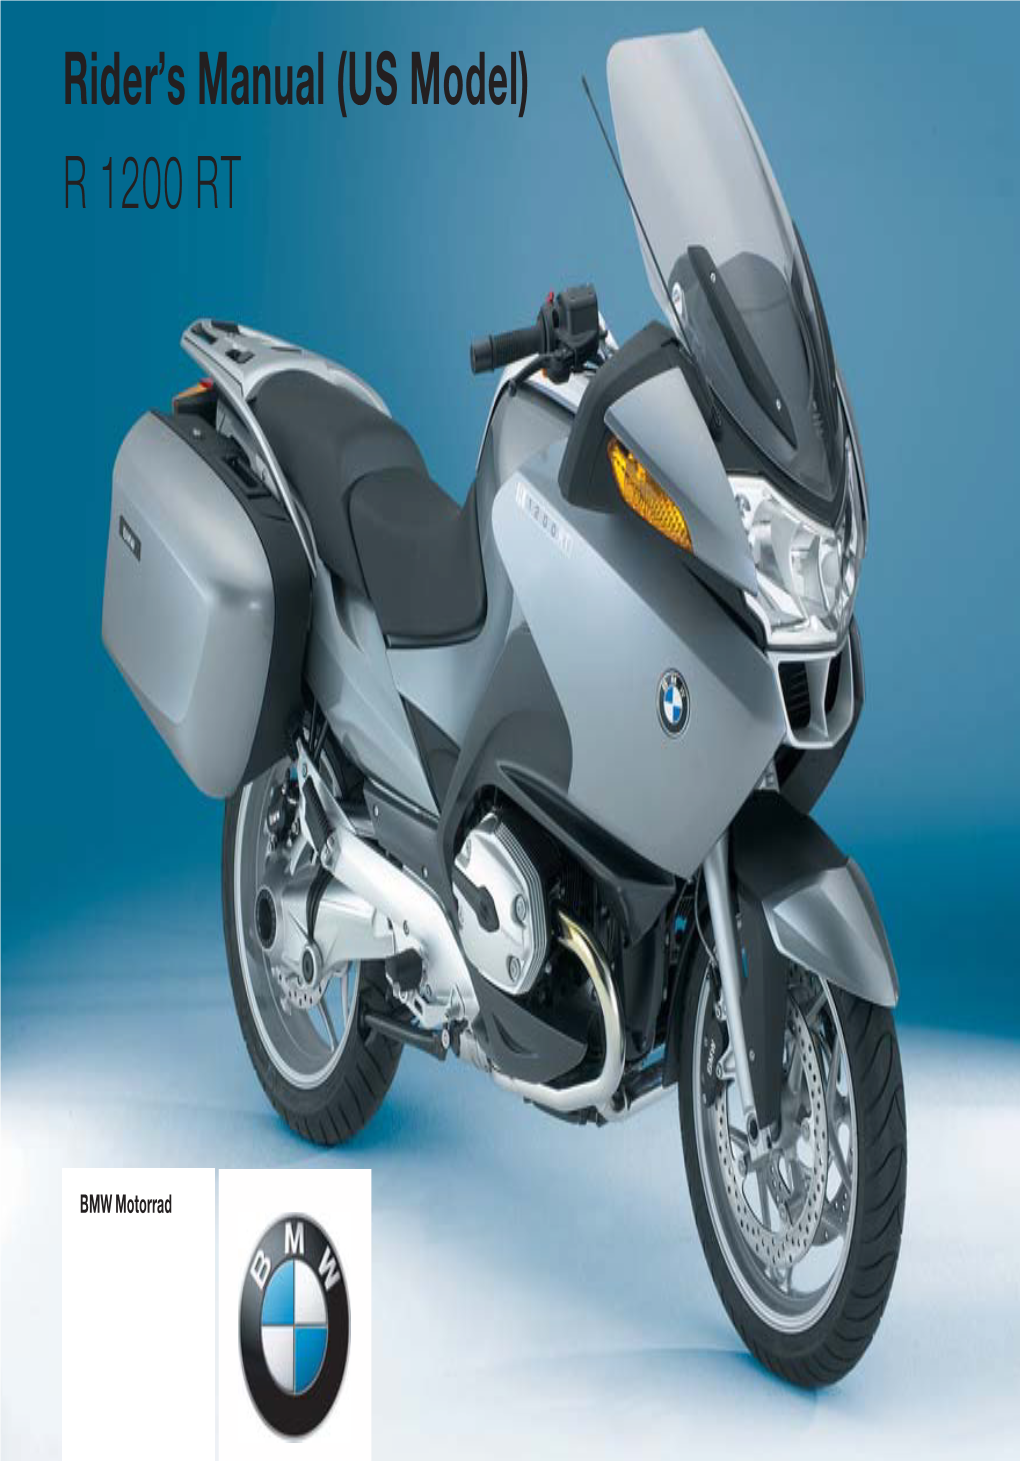 Rider's Manual (US Model) R 1200 RT